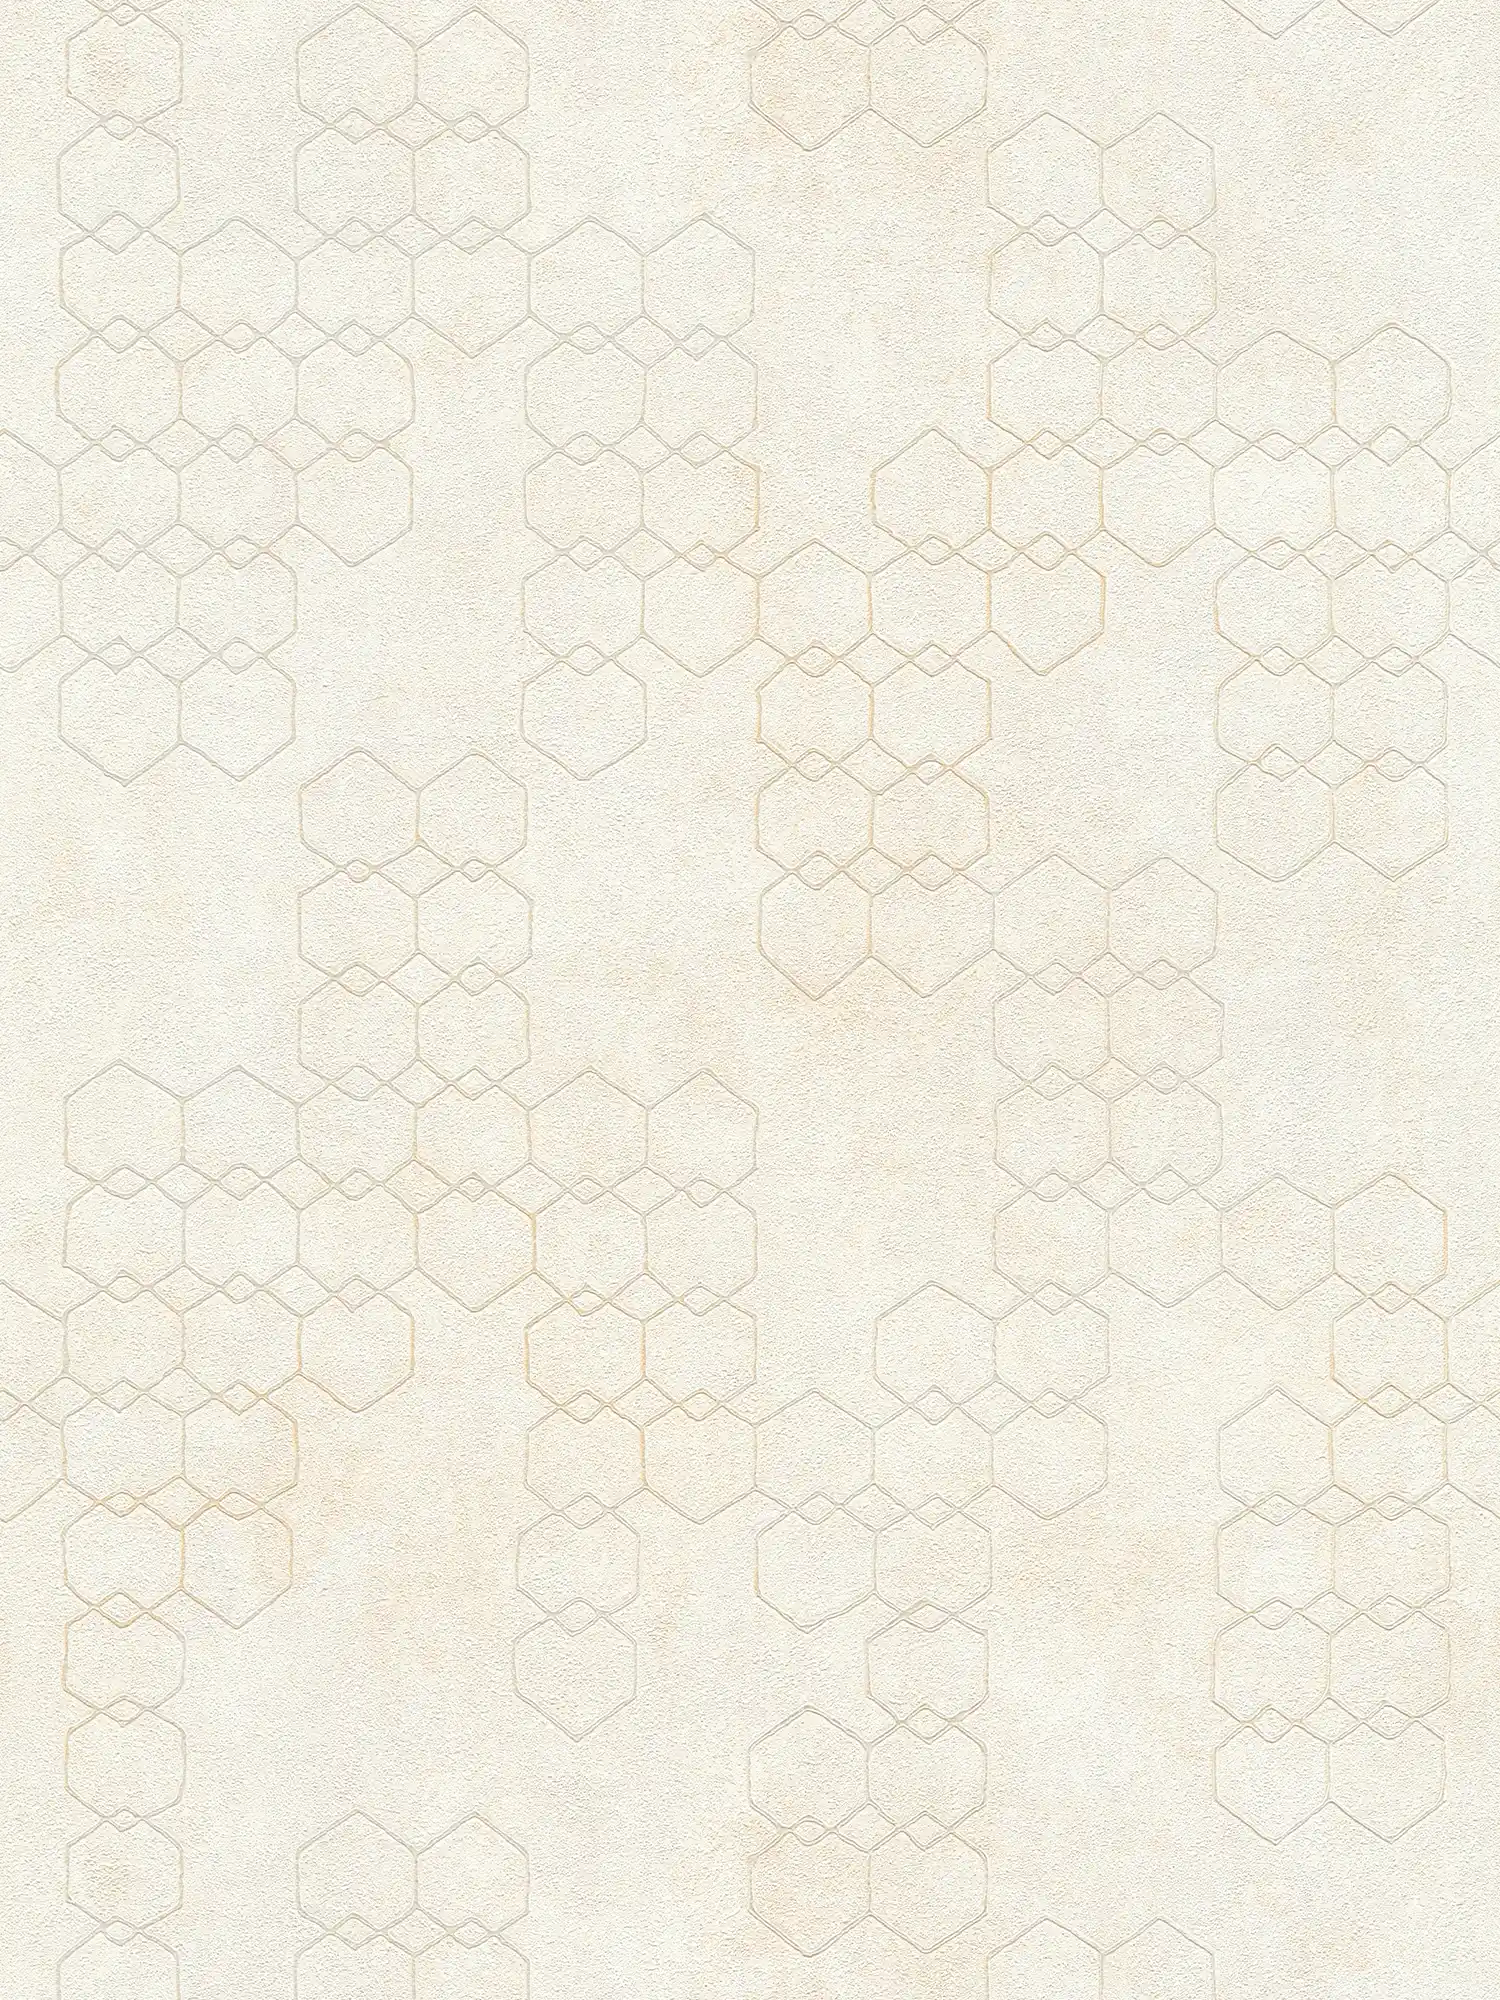 Geometric pattern wallpaper in industrial style - cream, grey, white
